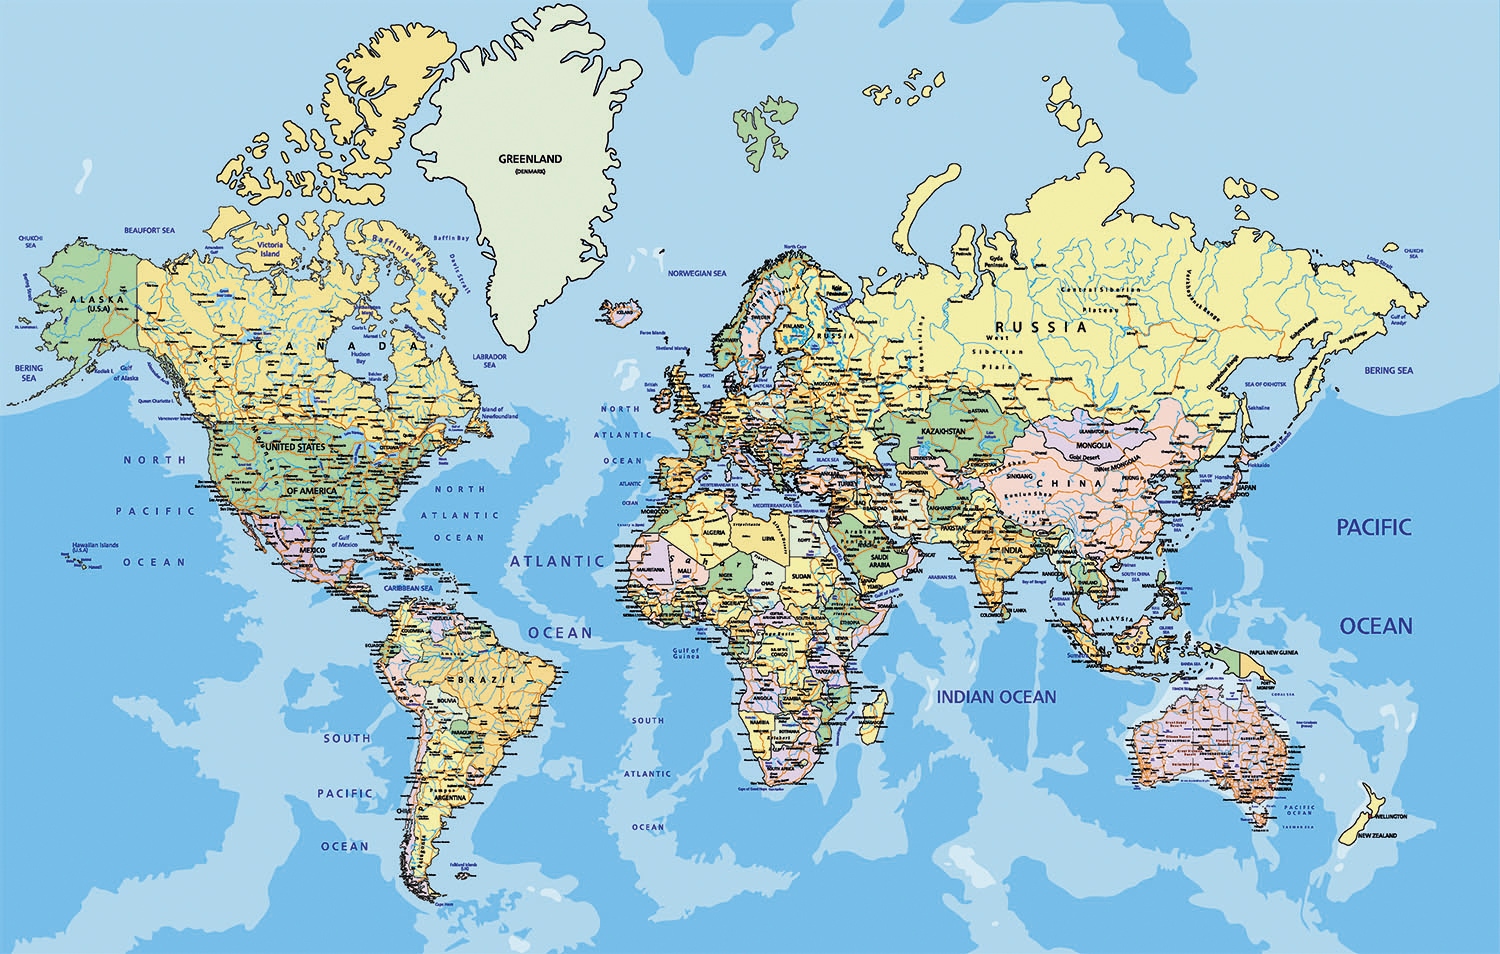 Papermoon Fototapete "World Map"